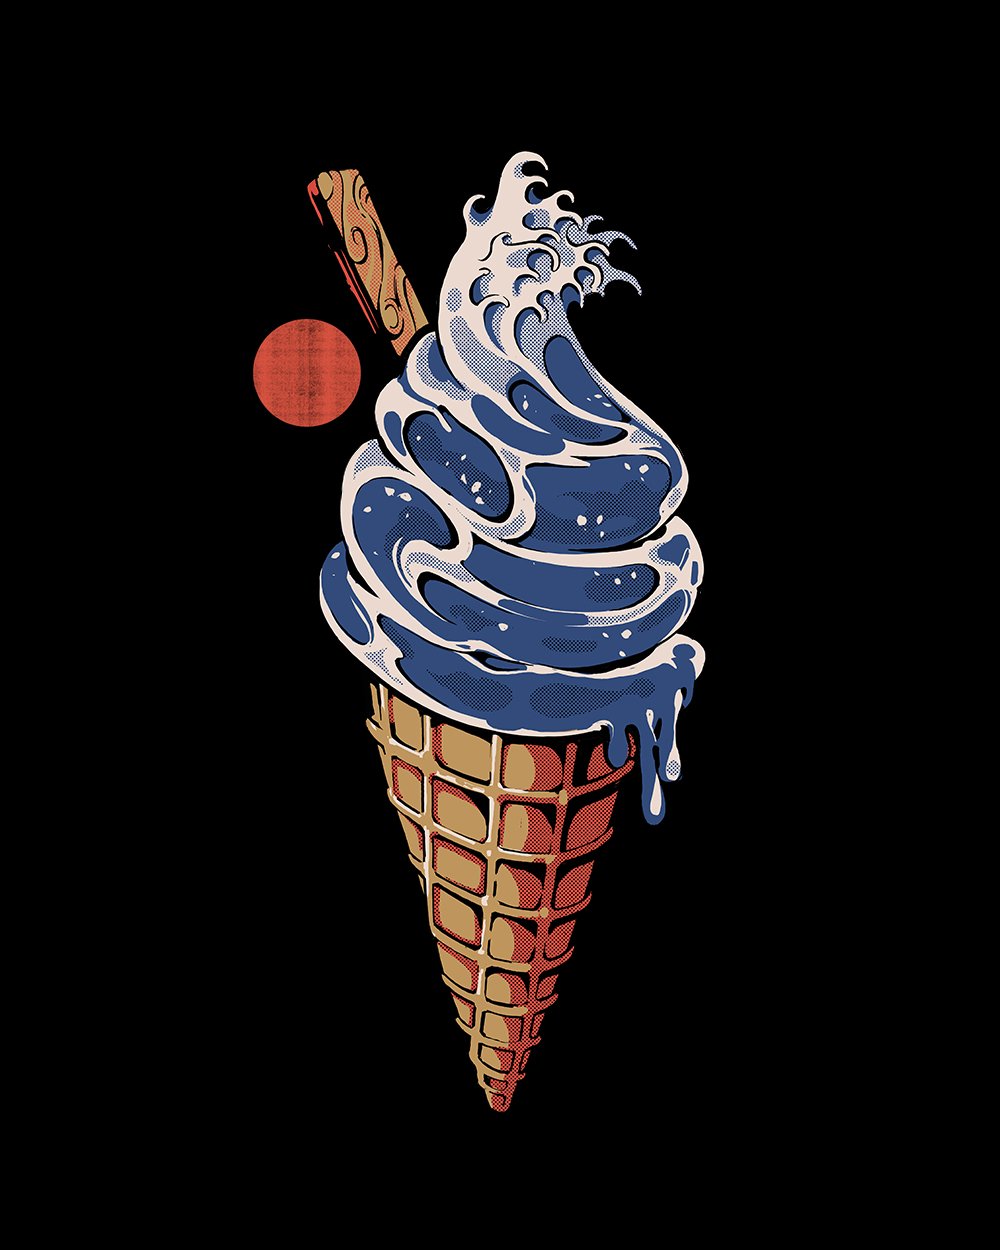 Great Ice Cream Kids T-Shirt Australia Online #colour_black